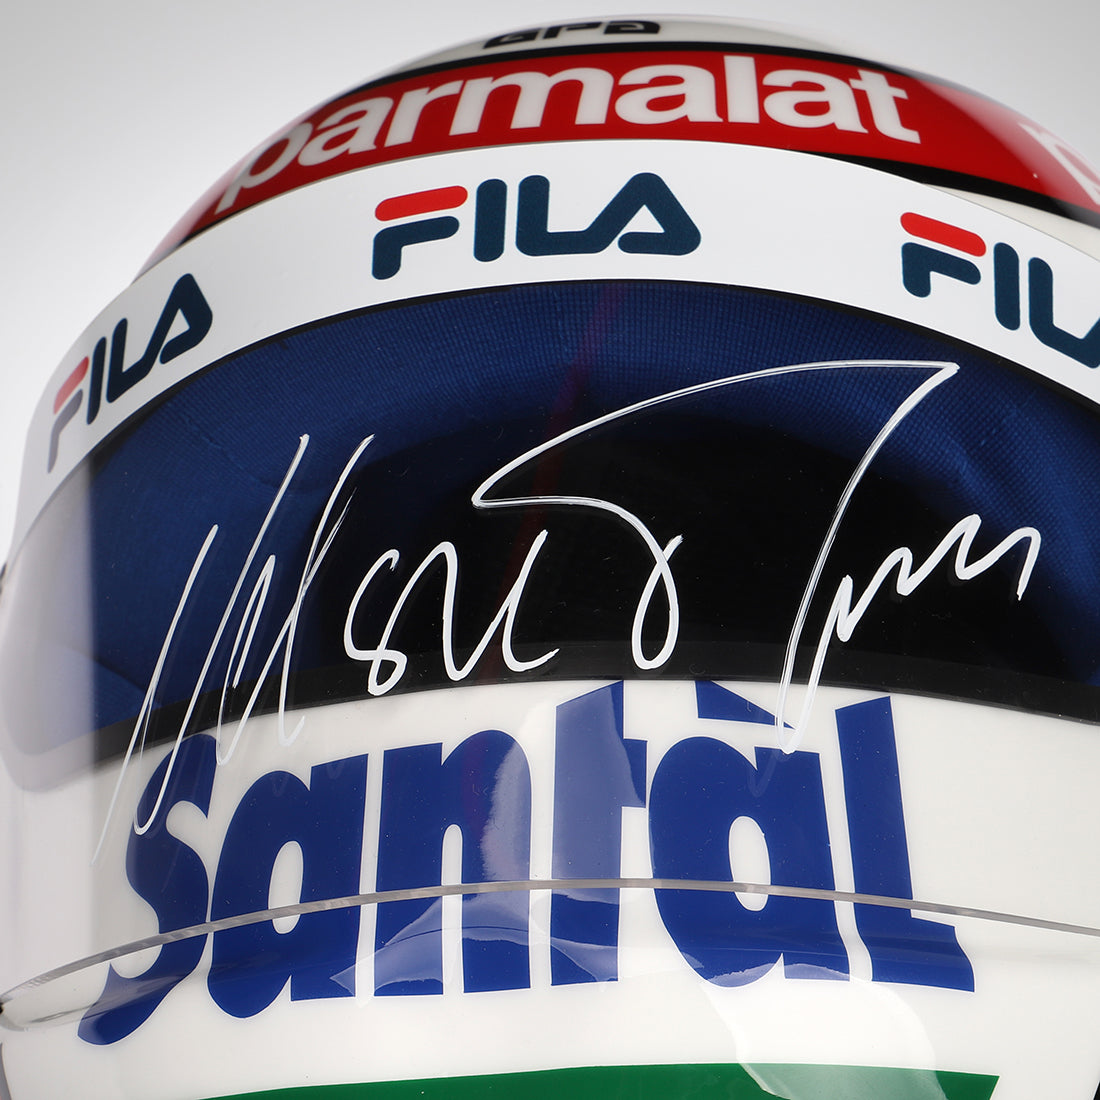 Nelson Piquet 1983 Signed Replica Helmet